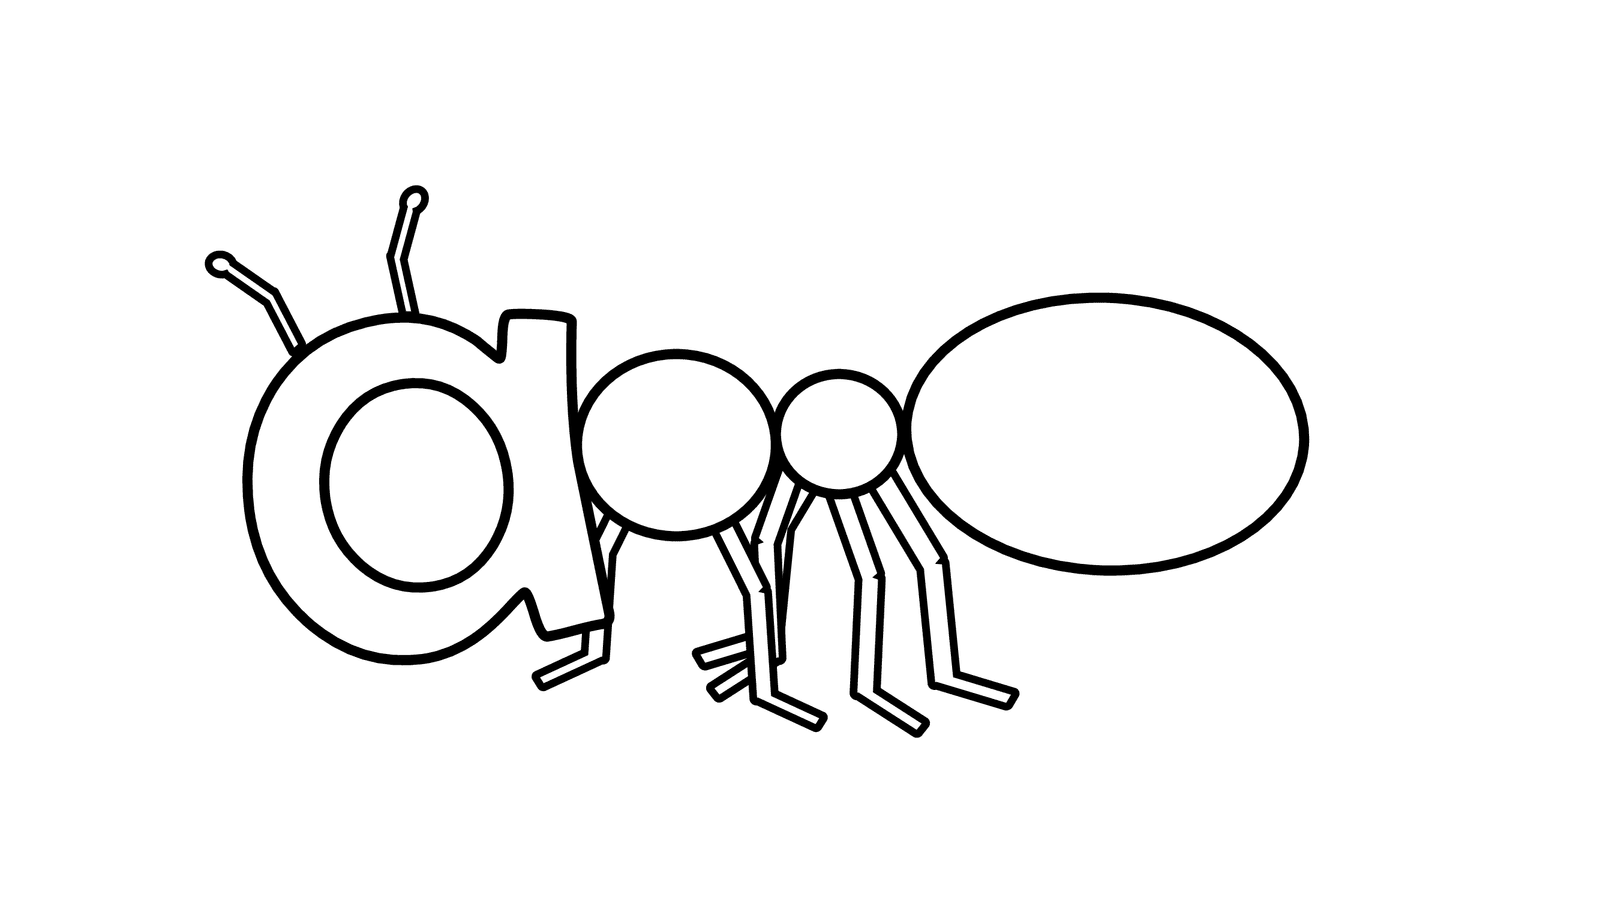 Line art ant illustration formed by letters.